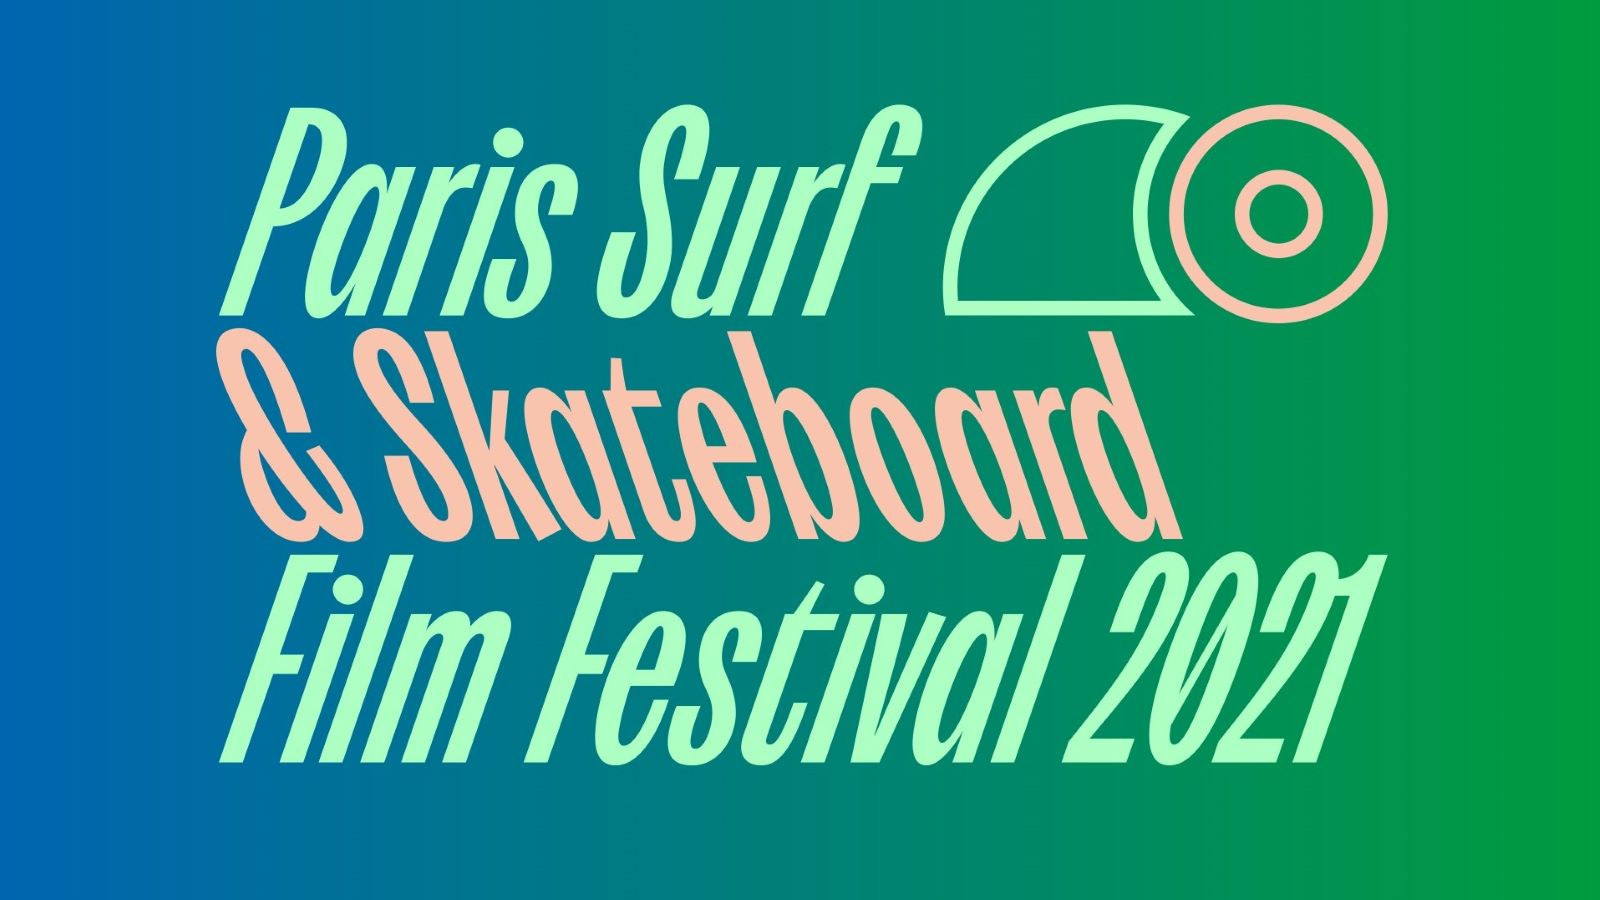 Paris Surf & Skate Film Festival 2021